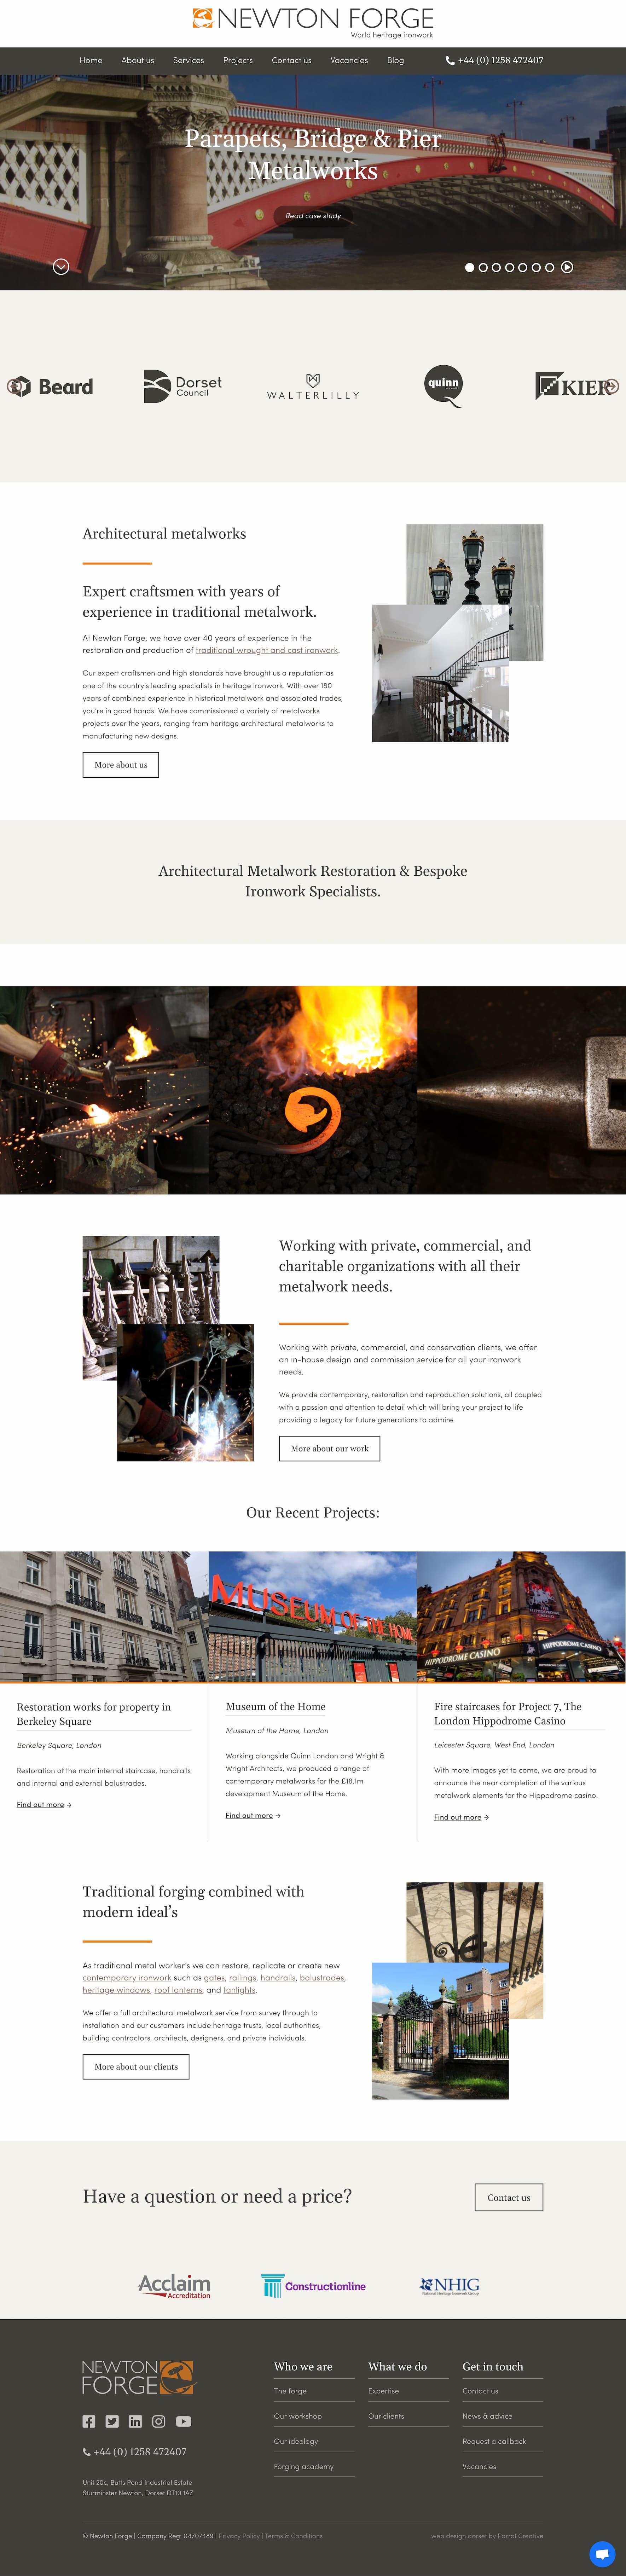 Newton Forge website homepage design